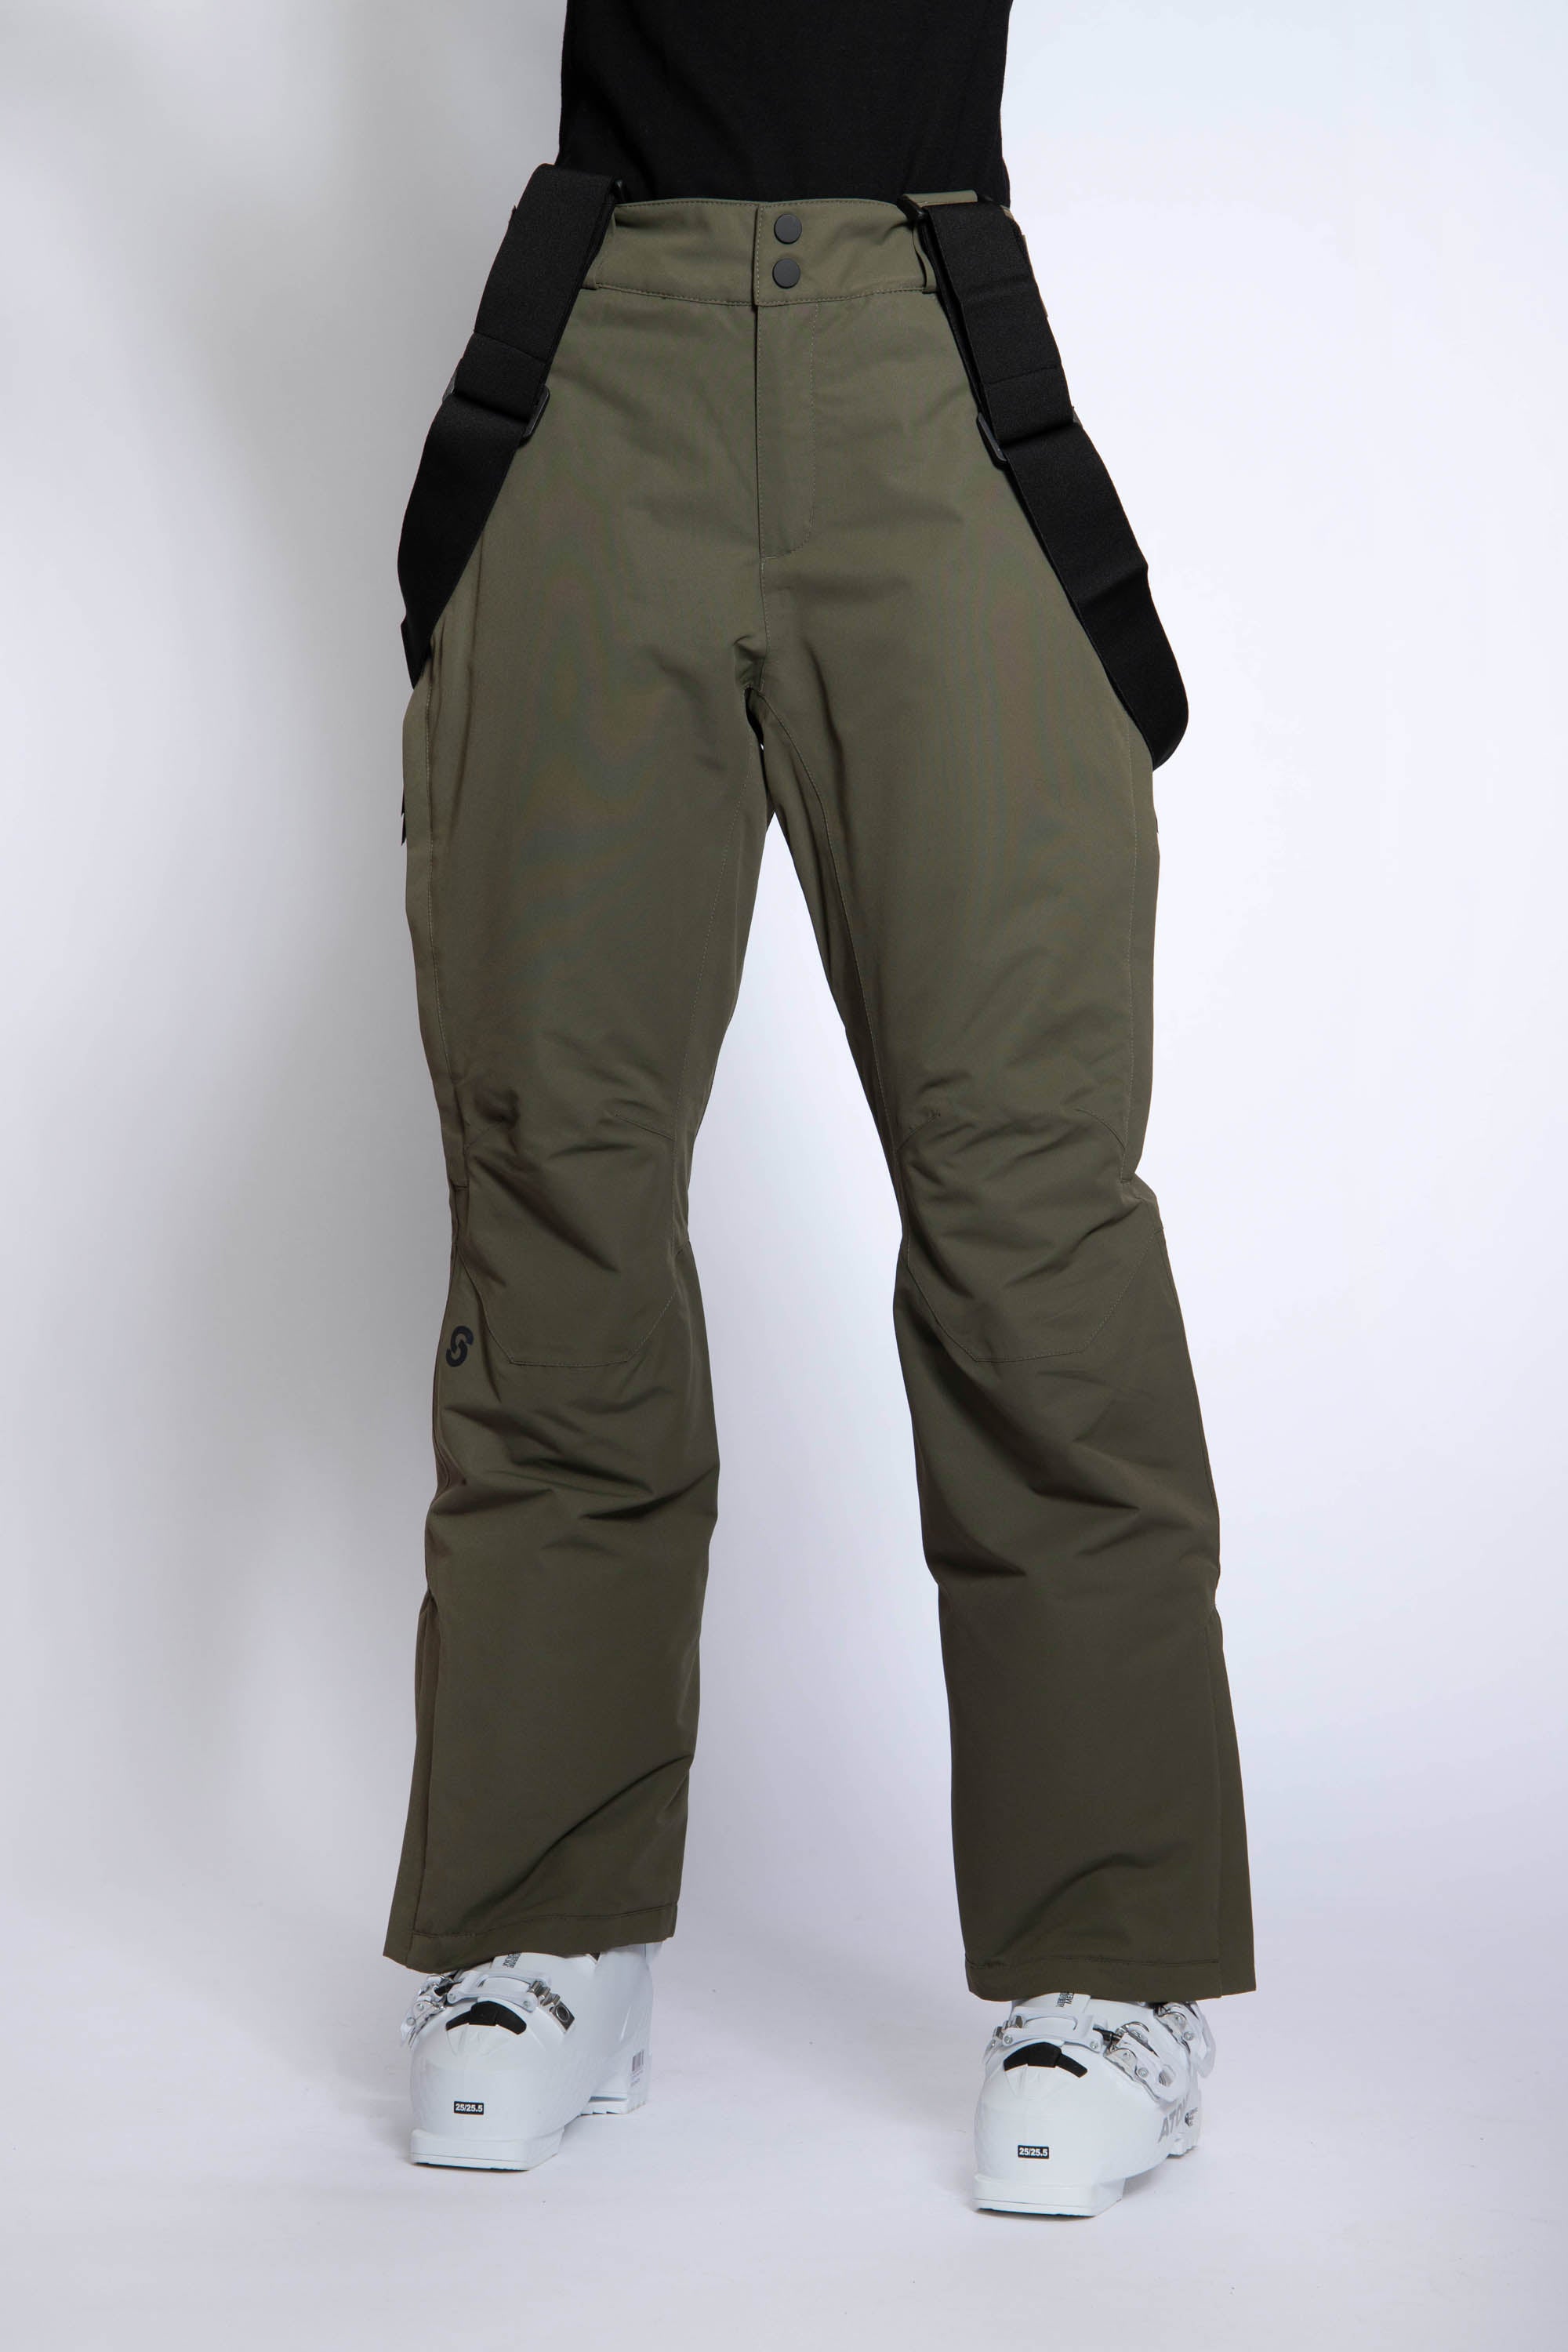 Terra Ski Pants Olive Green - Women's